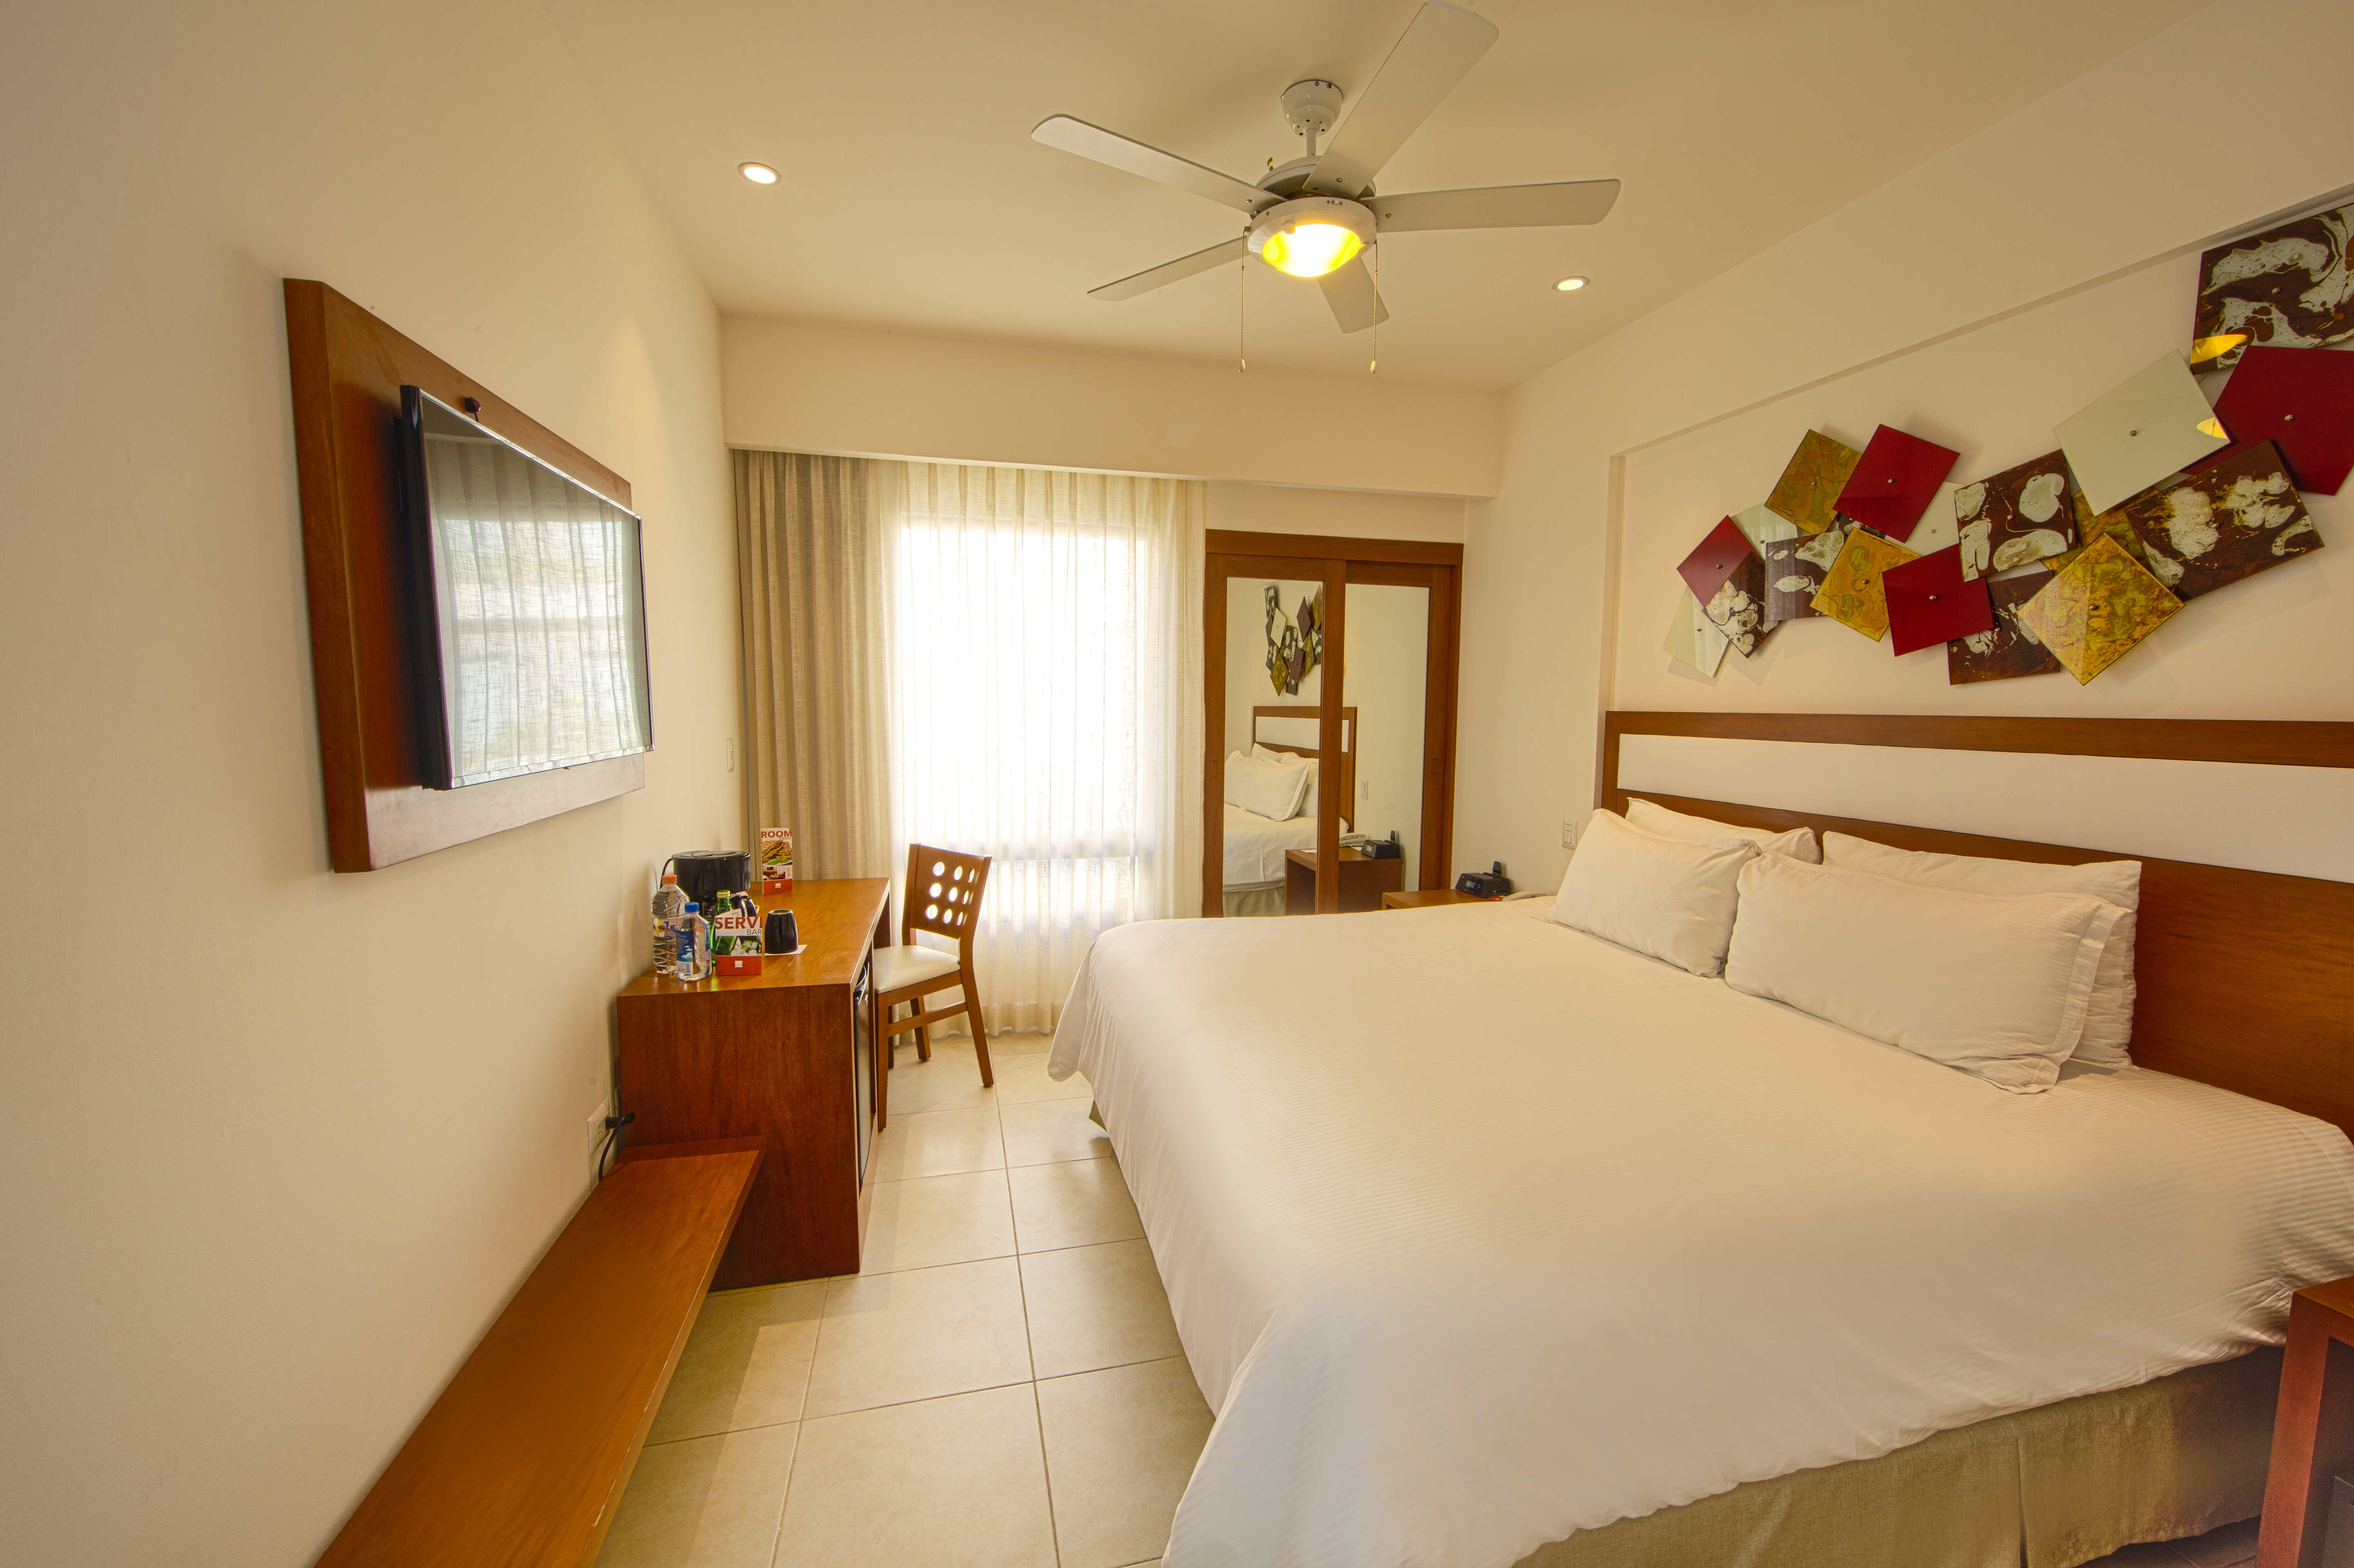 Ambiance Suites Cancun